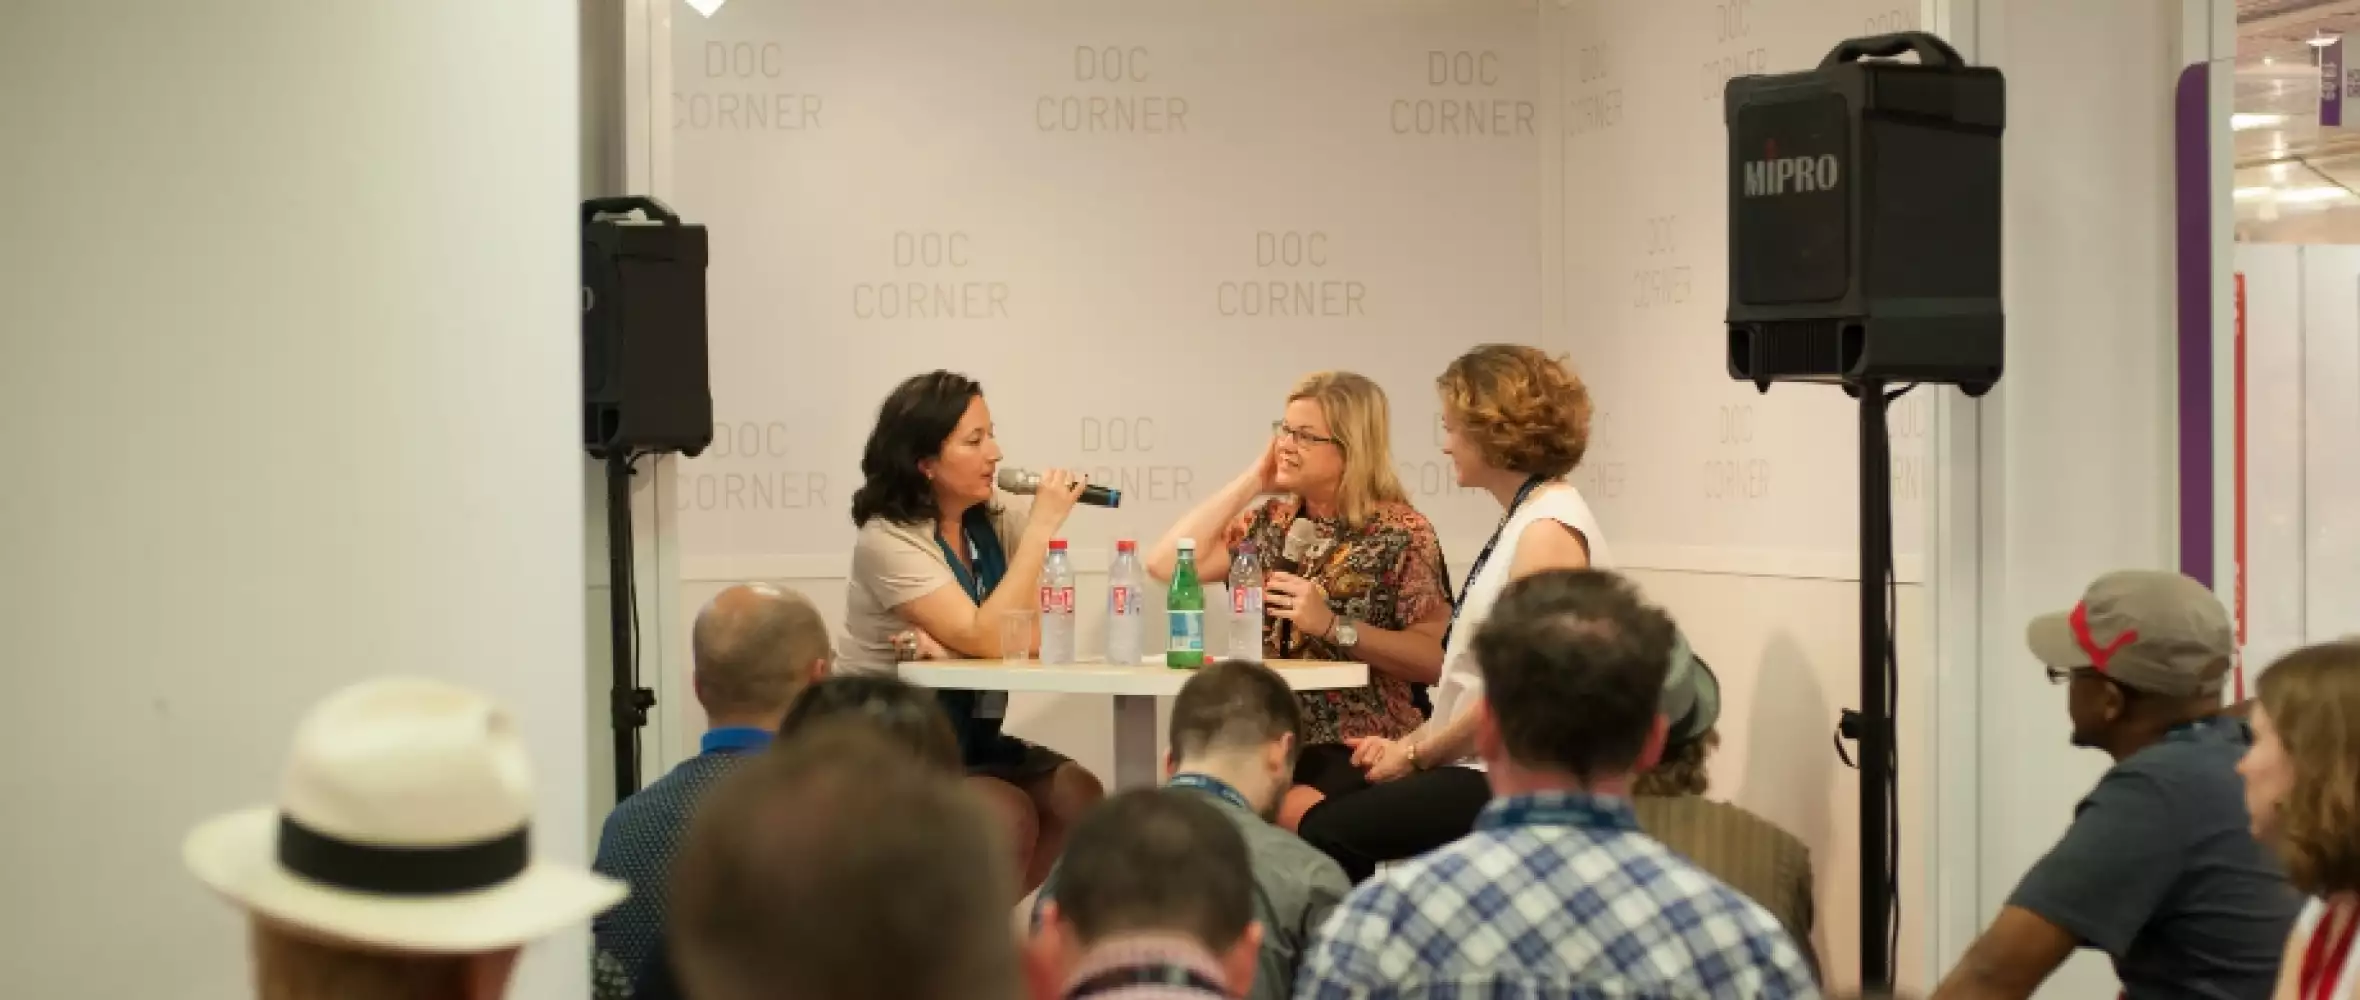 Cannes 2016: Czech documentaries in Doc Corner